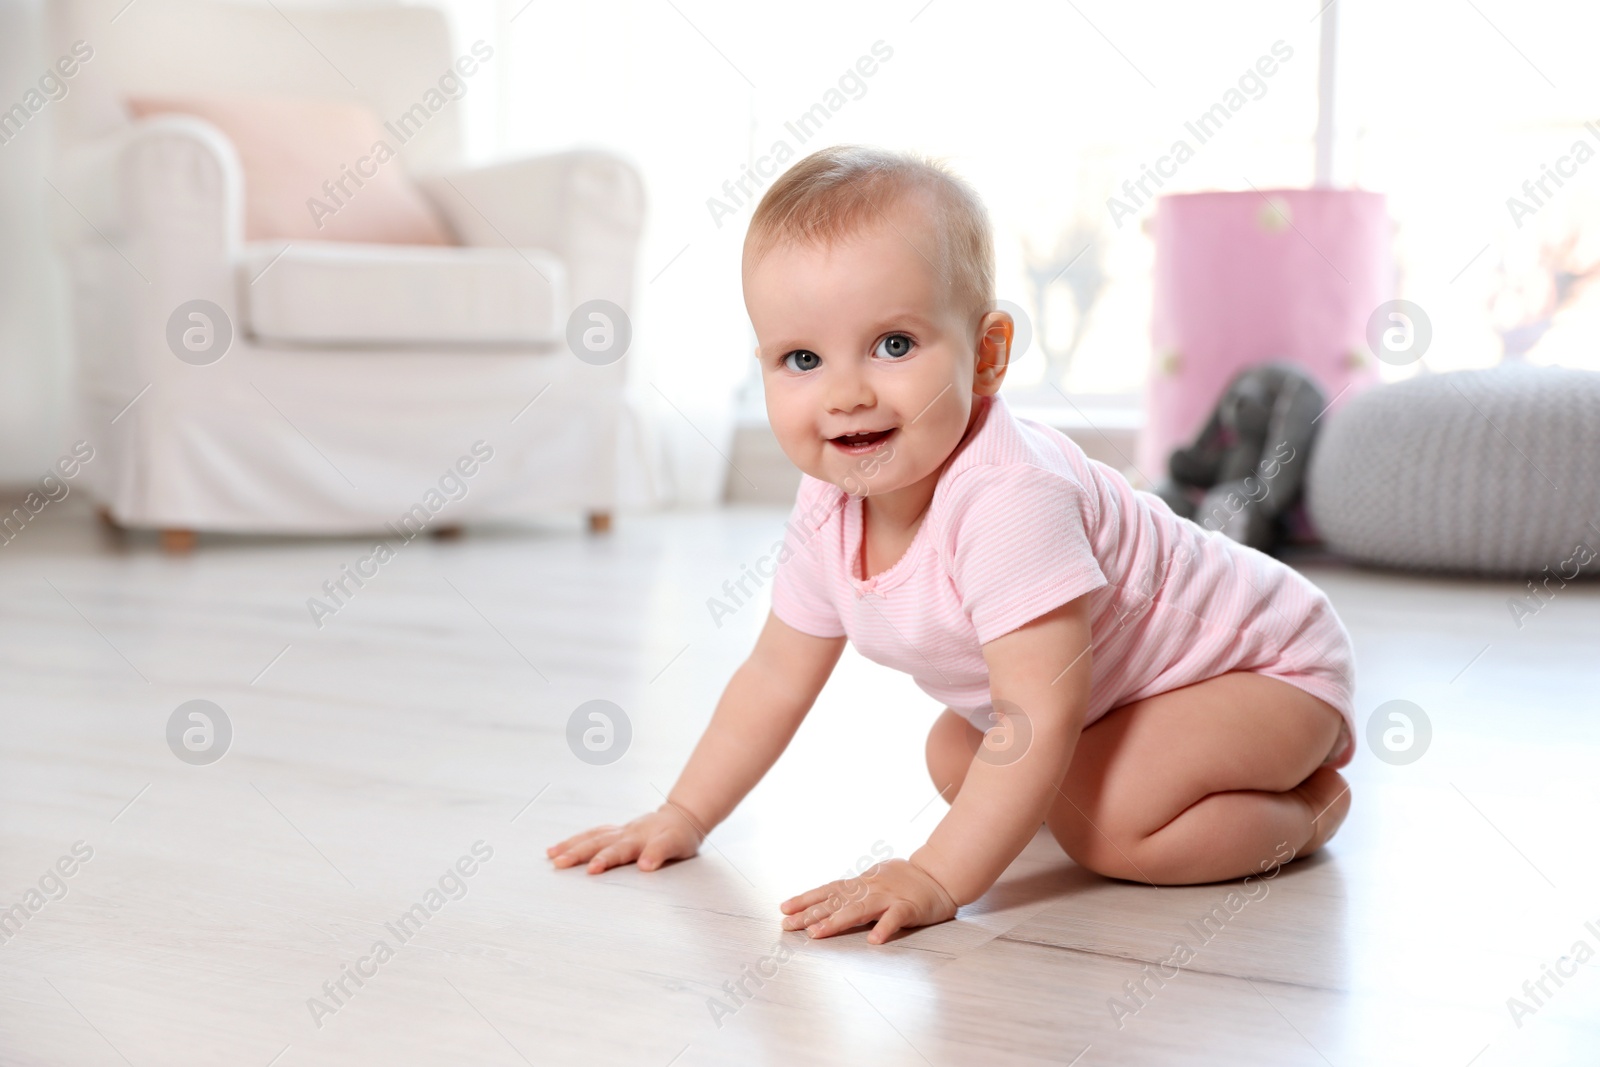 Photo of Cute baby girl sitting on floor in room